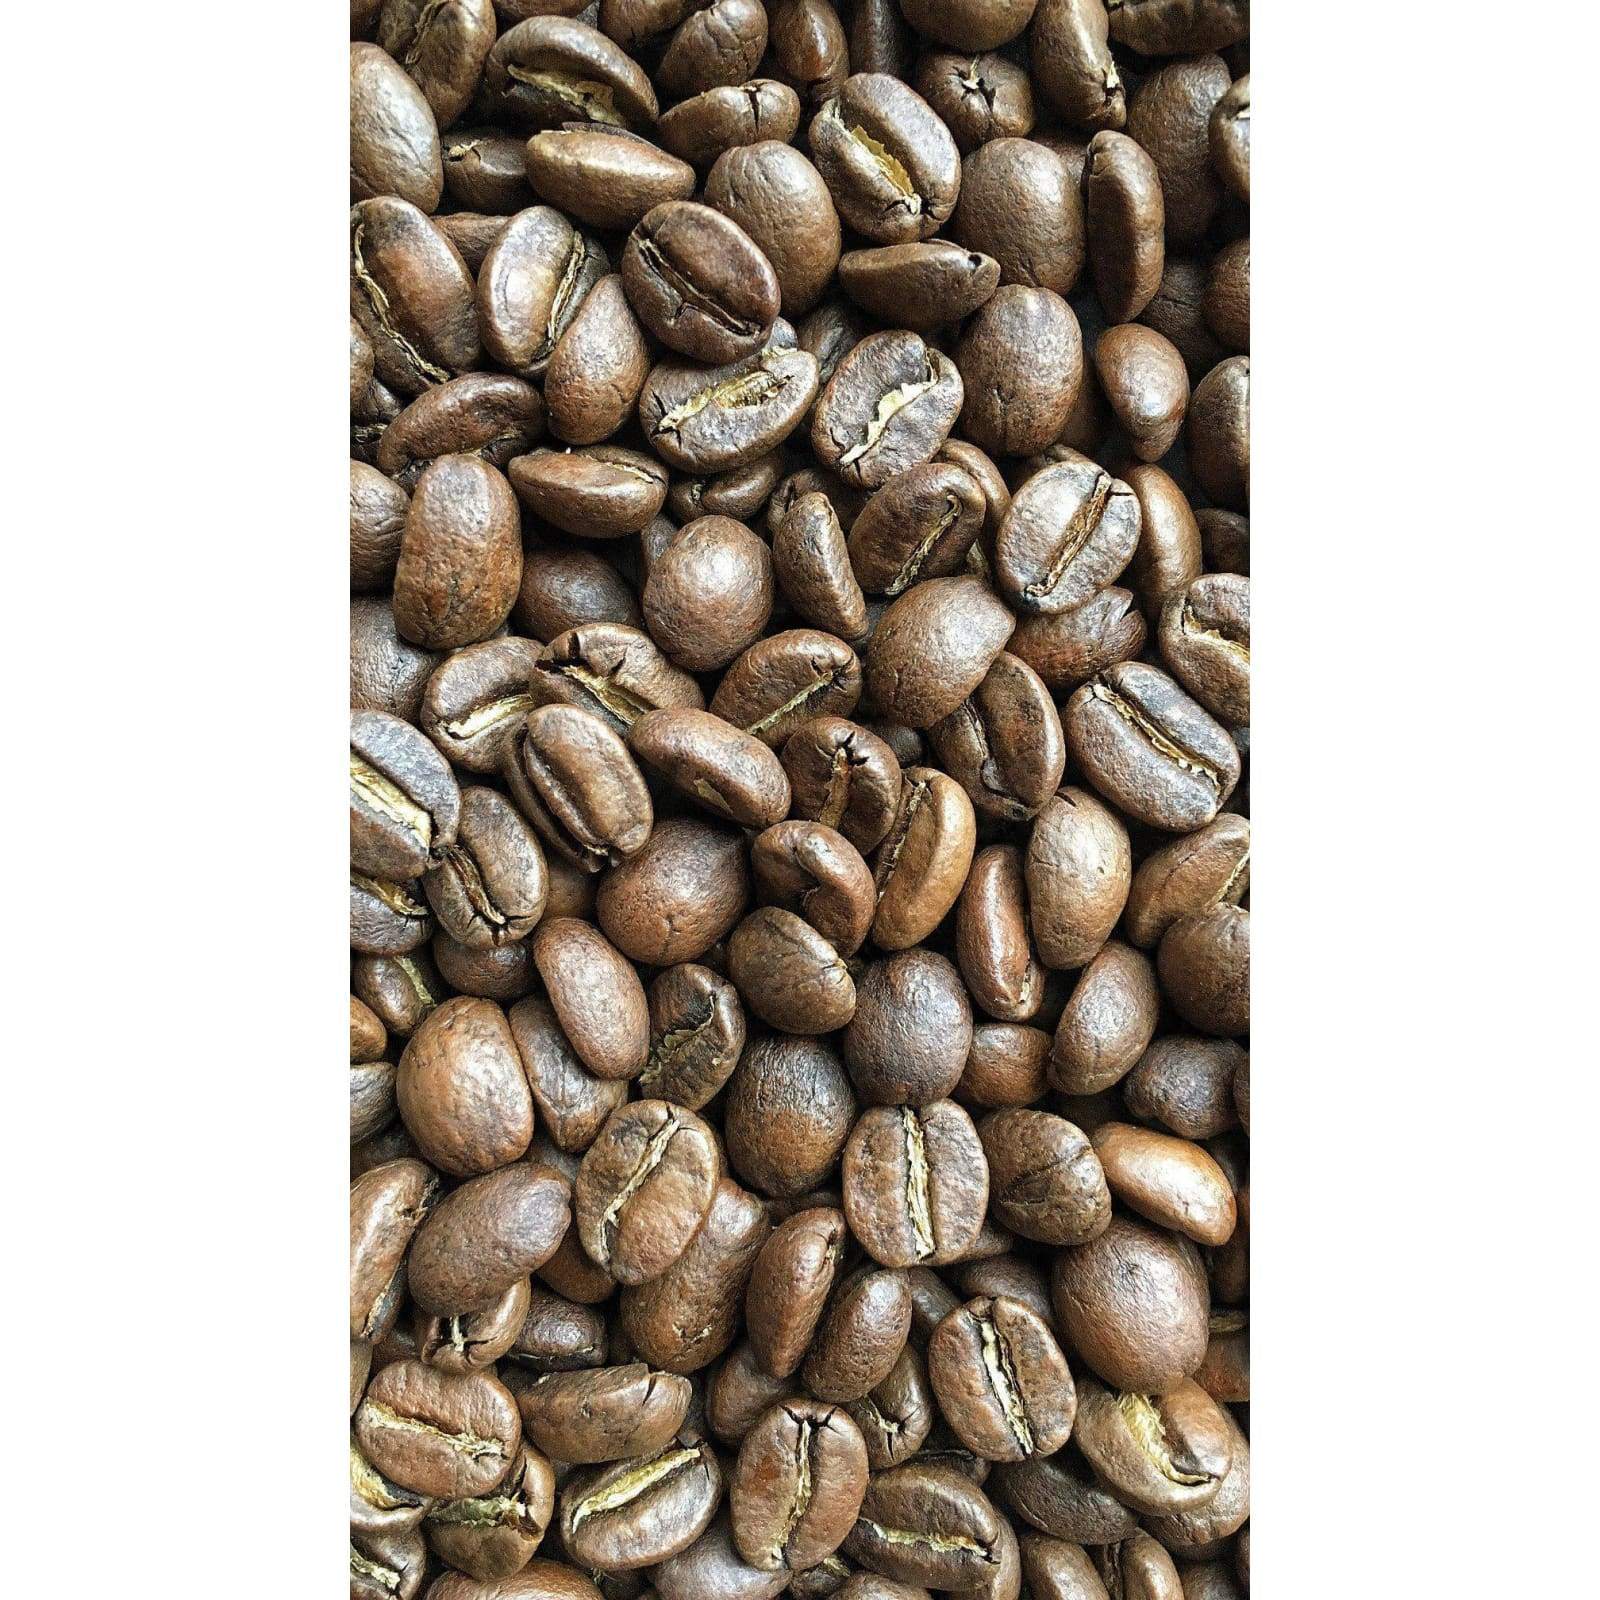 Mexico Craft Coffee - Single Origin - Coffee - $15.25